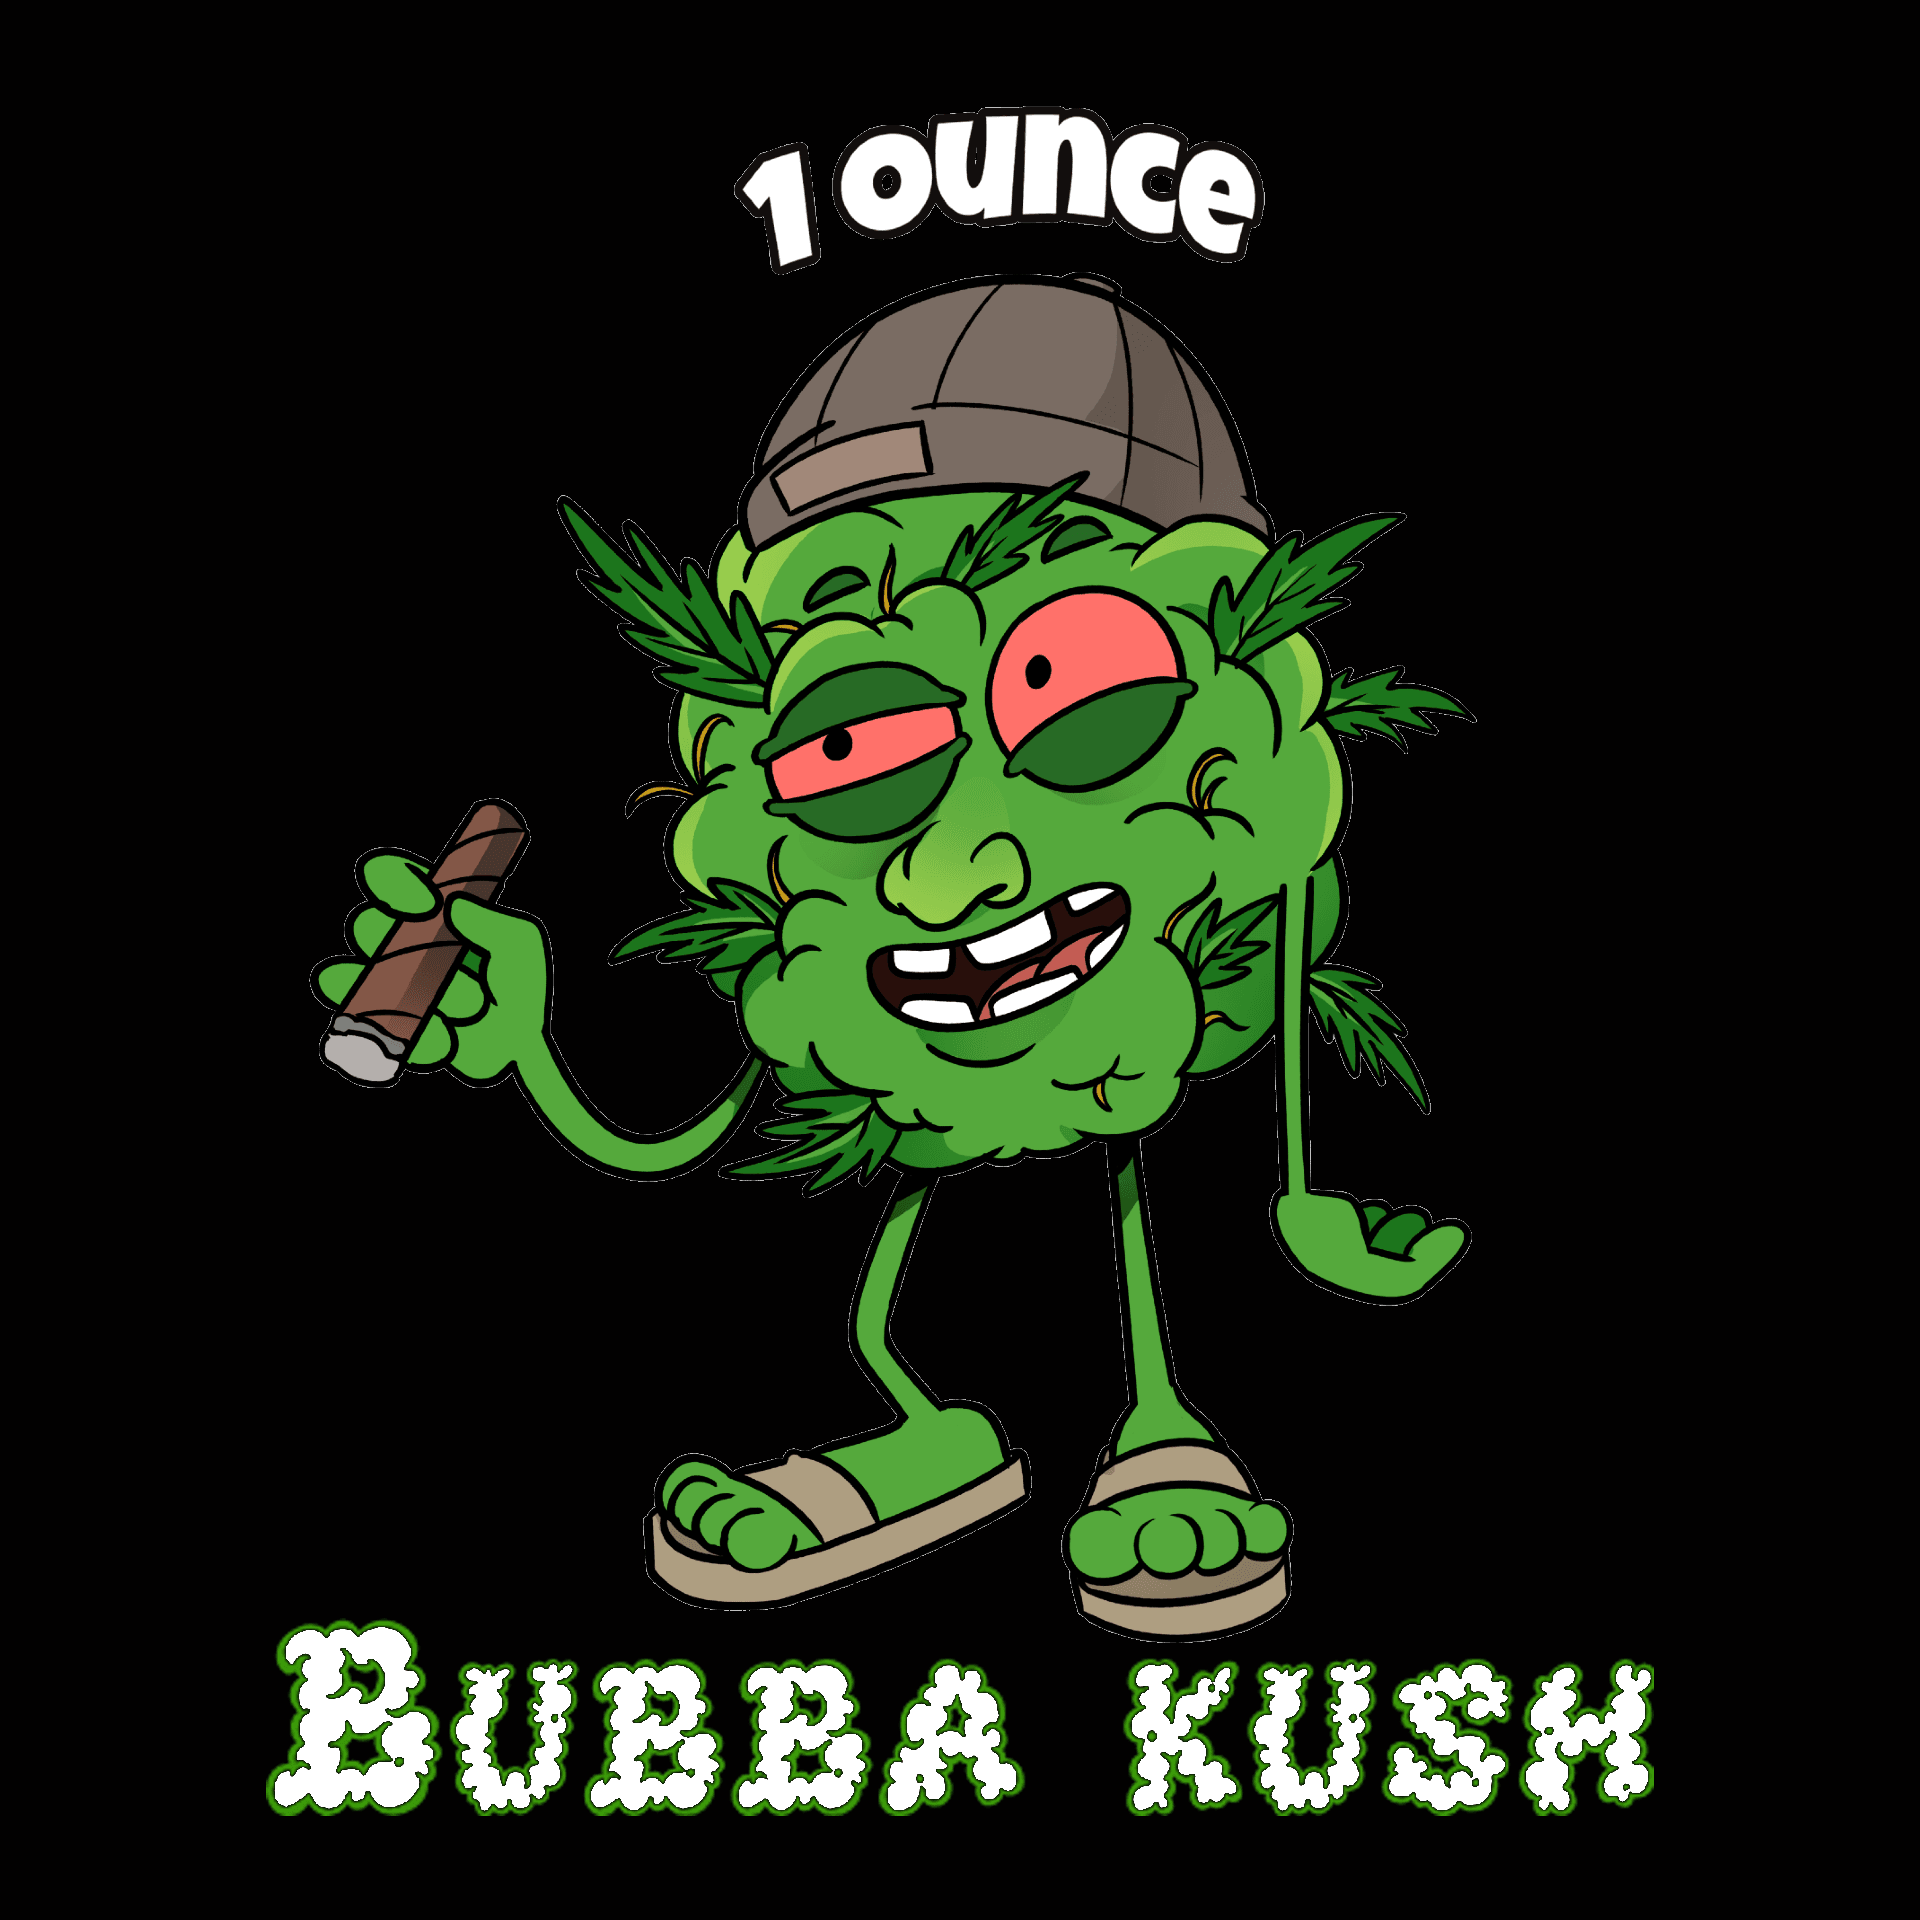 Bubba Kush 1 Ounce